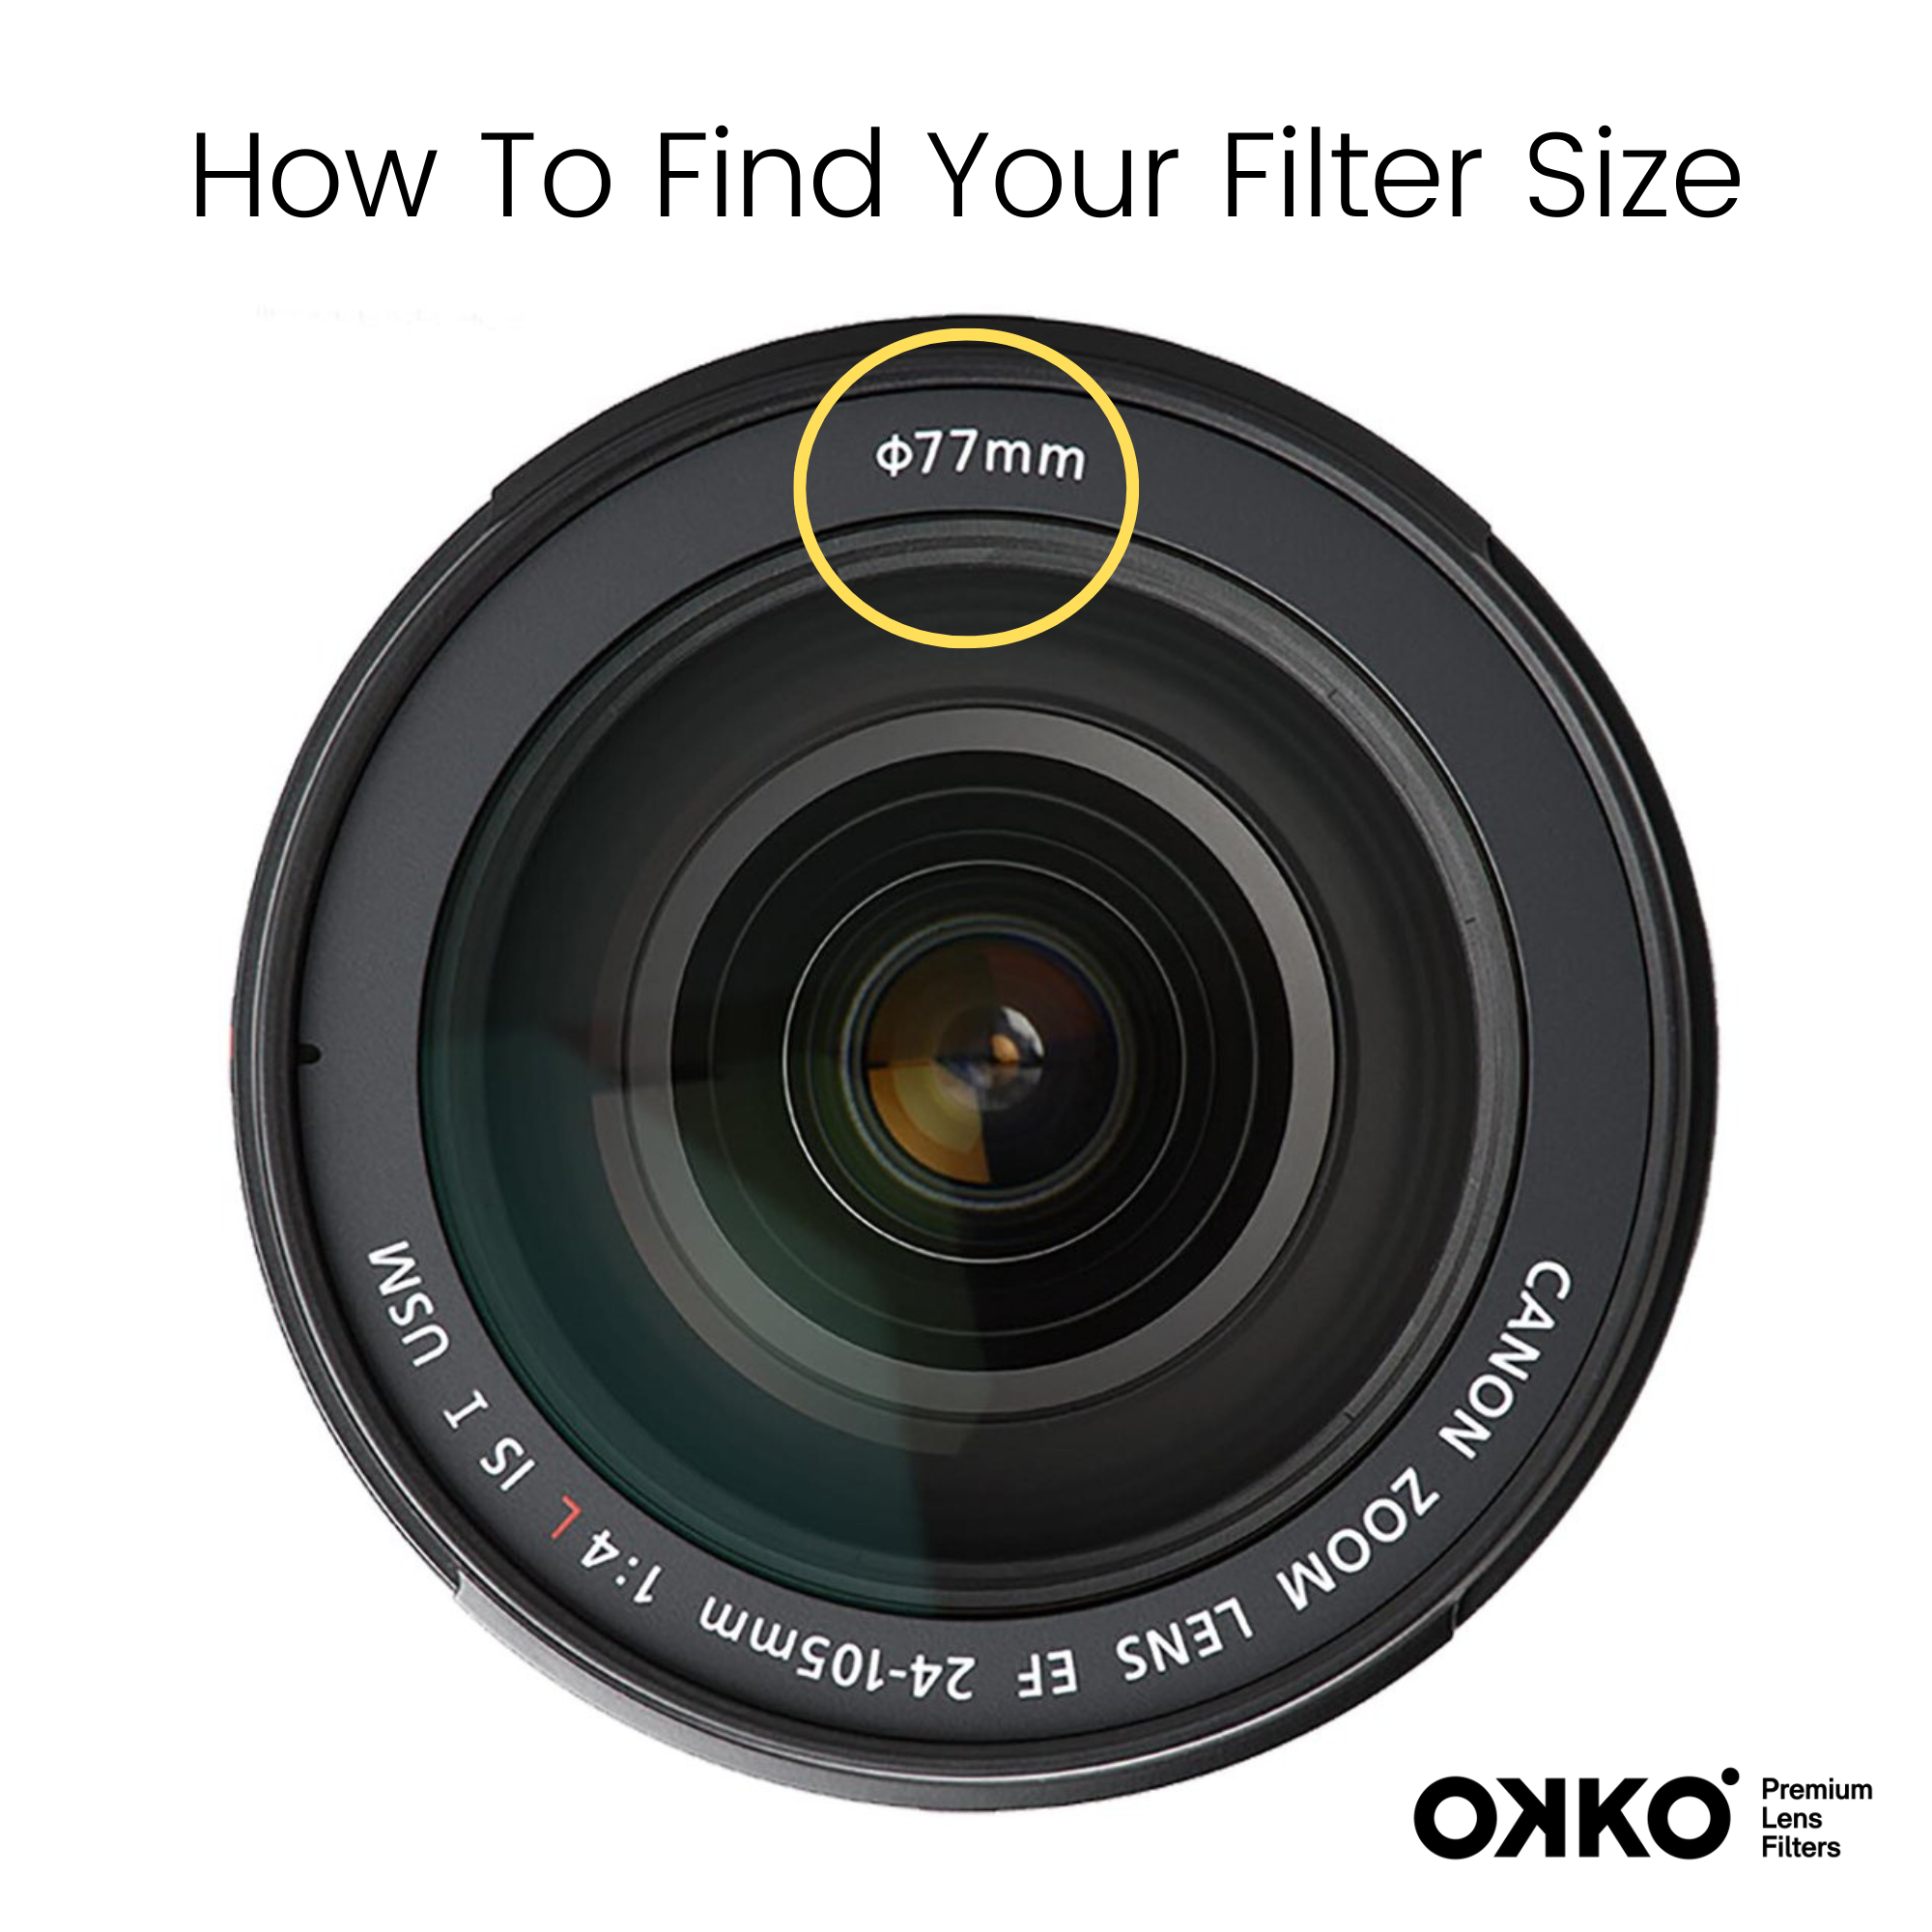 OKKO (Lite) Circular Polarizer Lens Filter